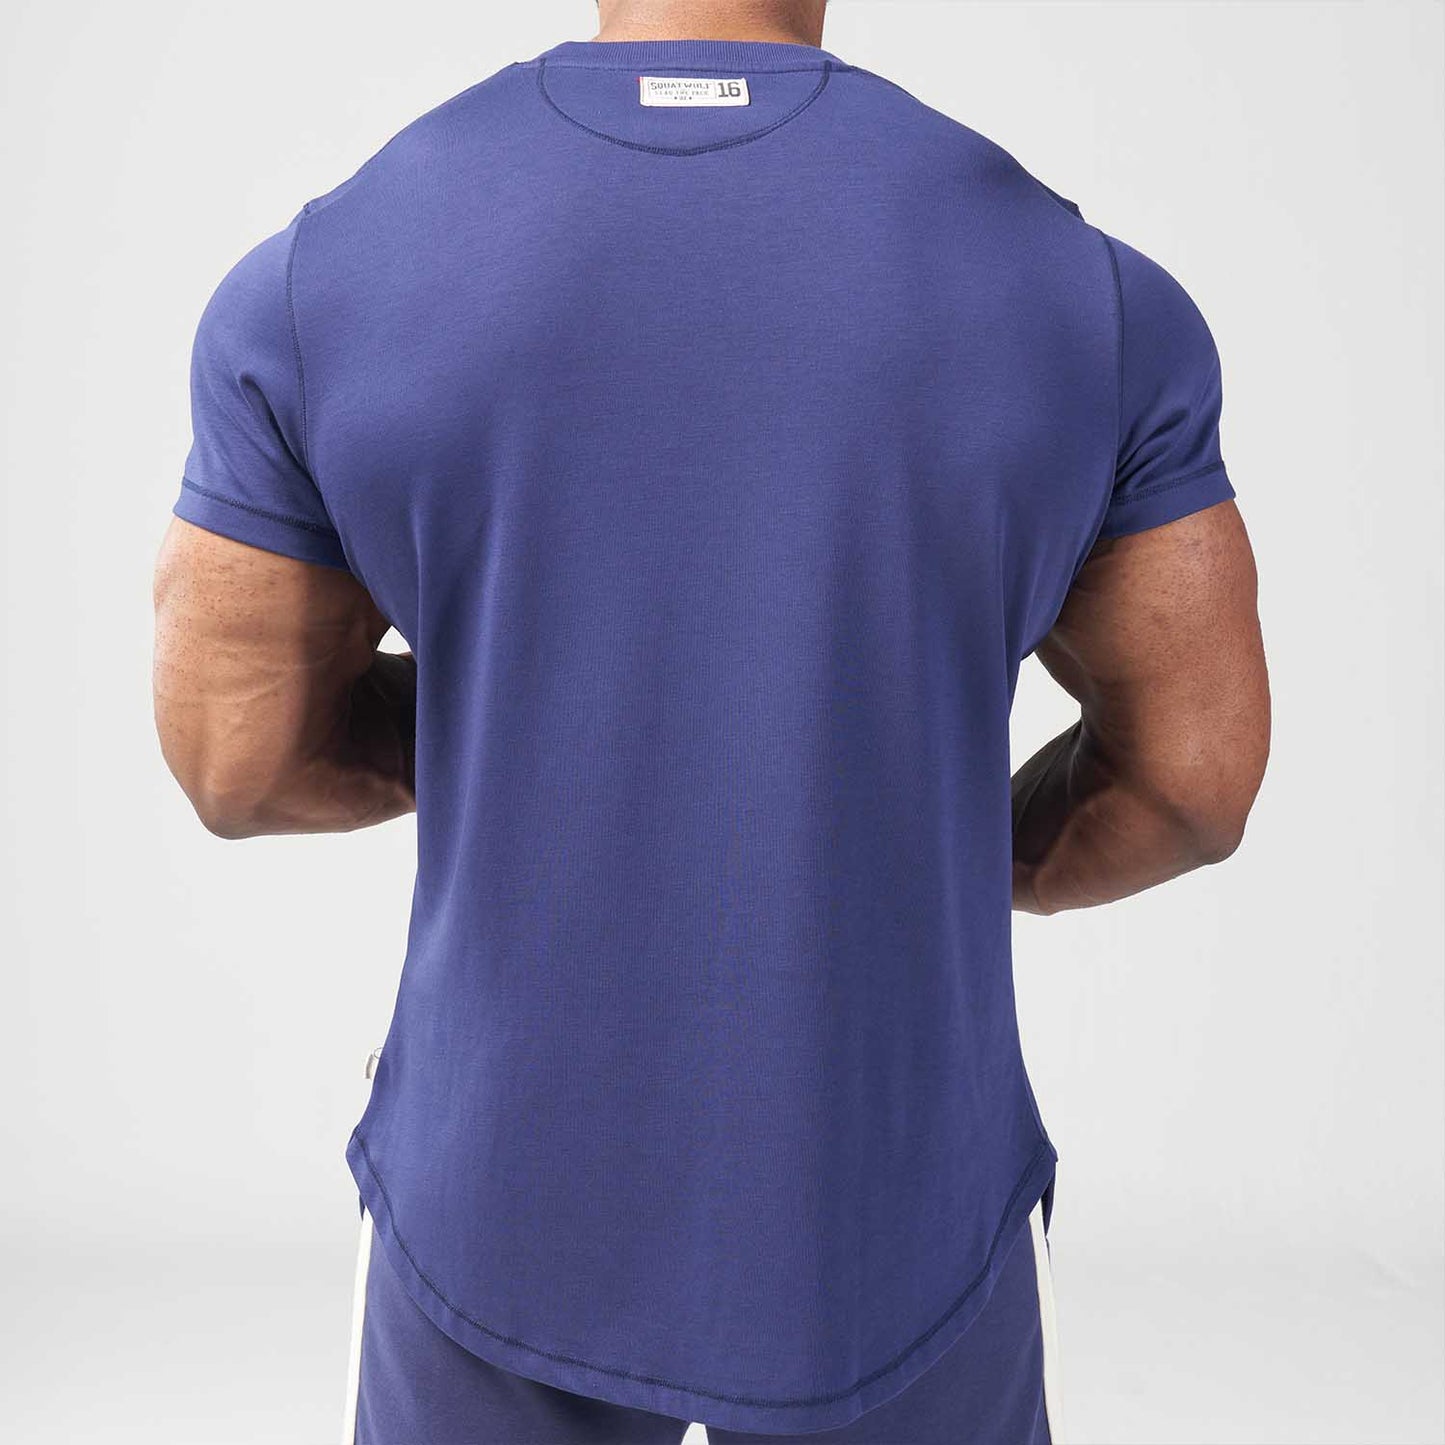 squatwolf-gym-wear-golden-era-retro-muscle-tee-patriot-blue-workout-shirts-for-men